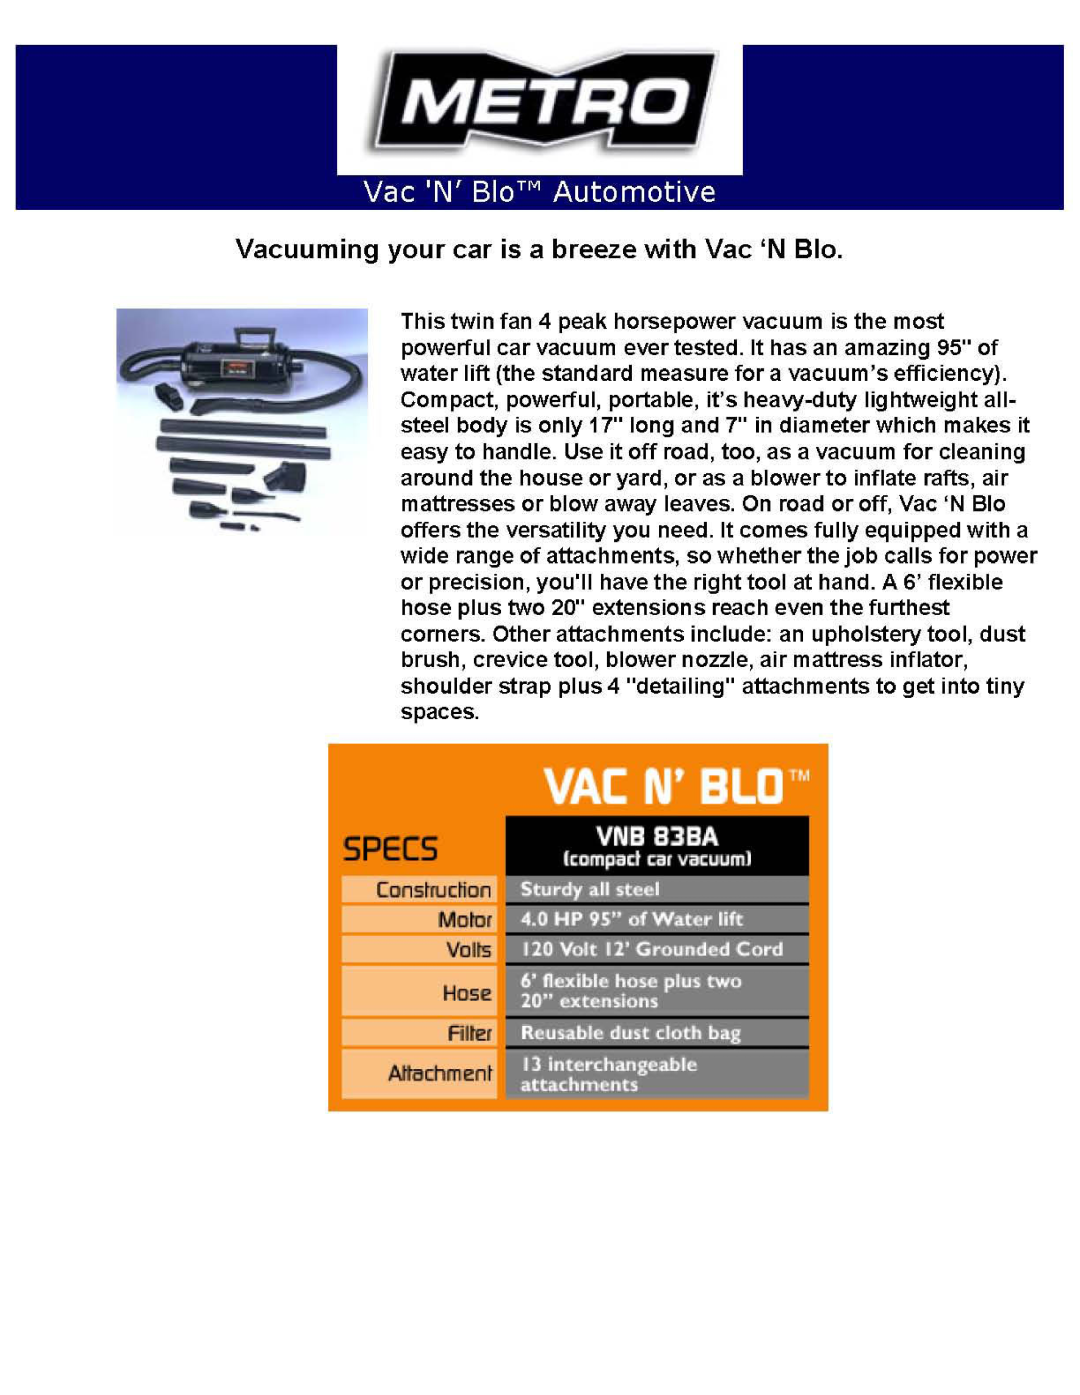 Metro DataVac VAC N' BLO manual 